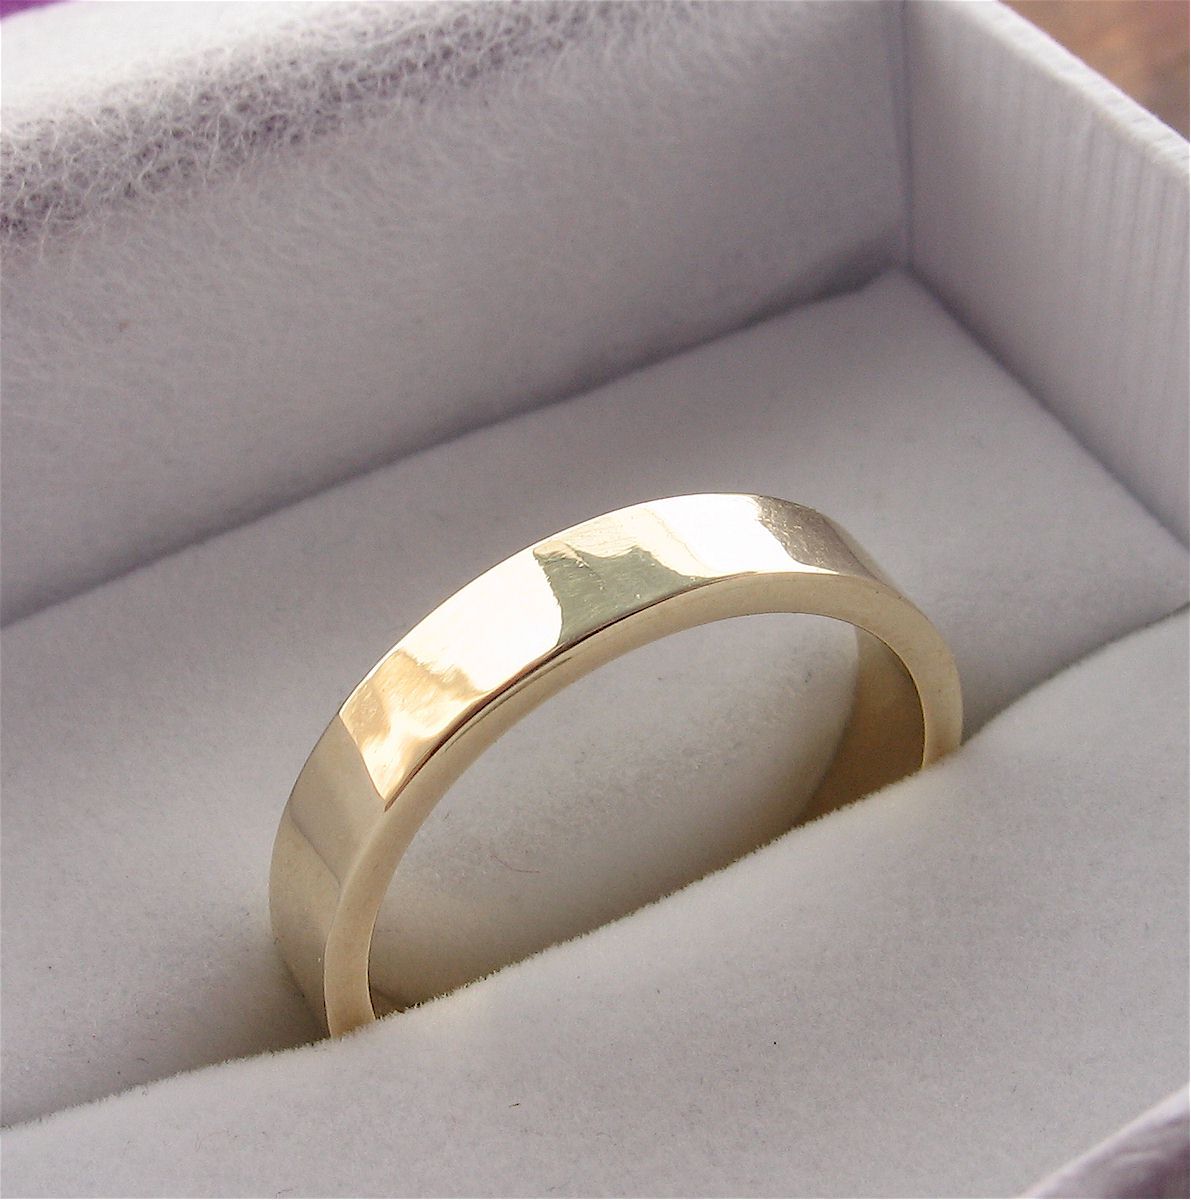 Gold broad wedding ring, Water Ripples design - Cumbrian Designs